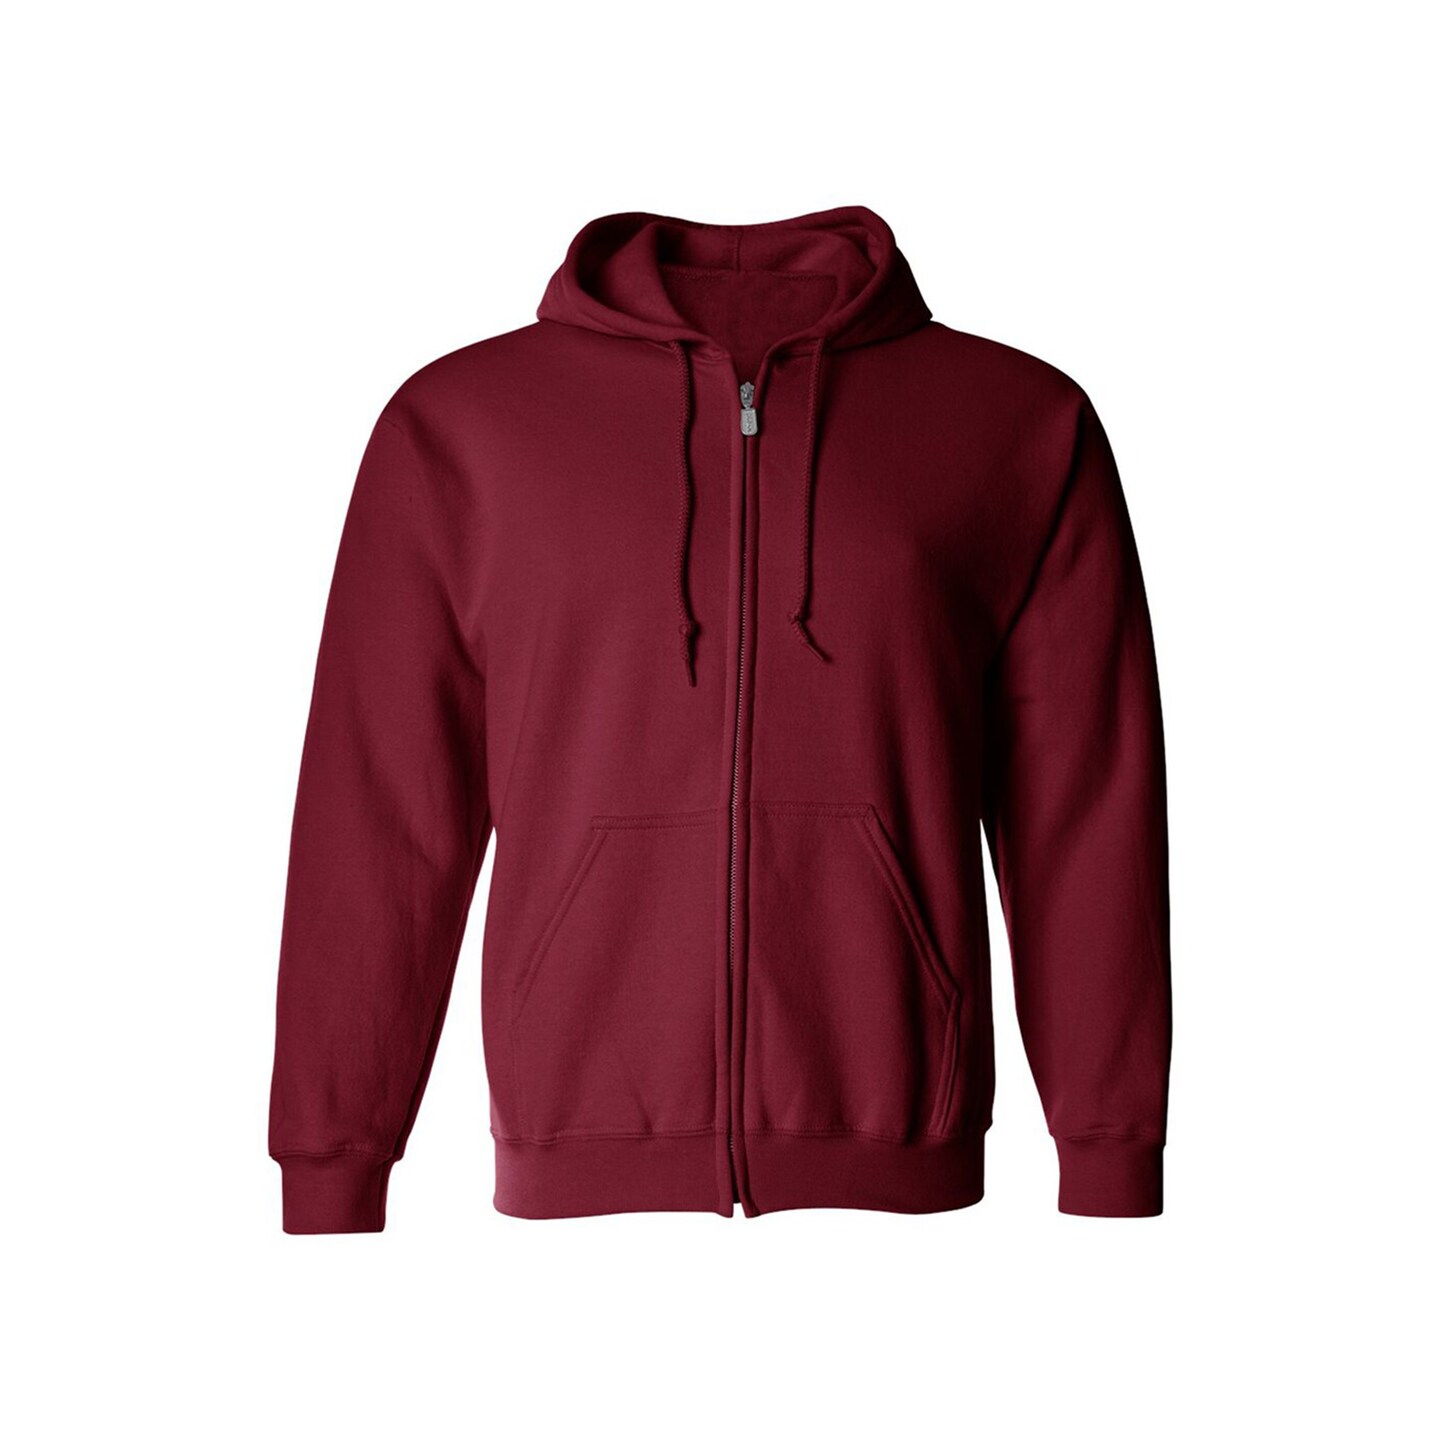 Heavy Blend™ Full-Zip Hooded Sweatshirt l 50/50 cotton/polyester